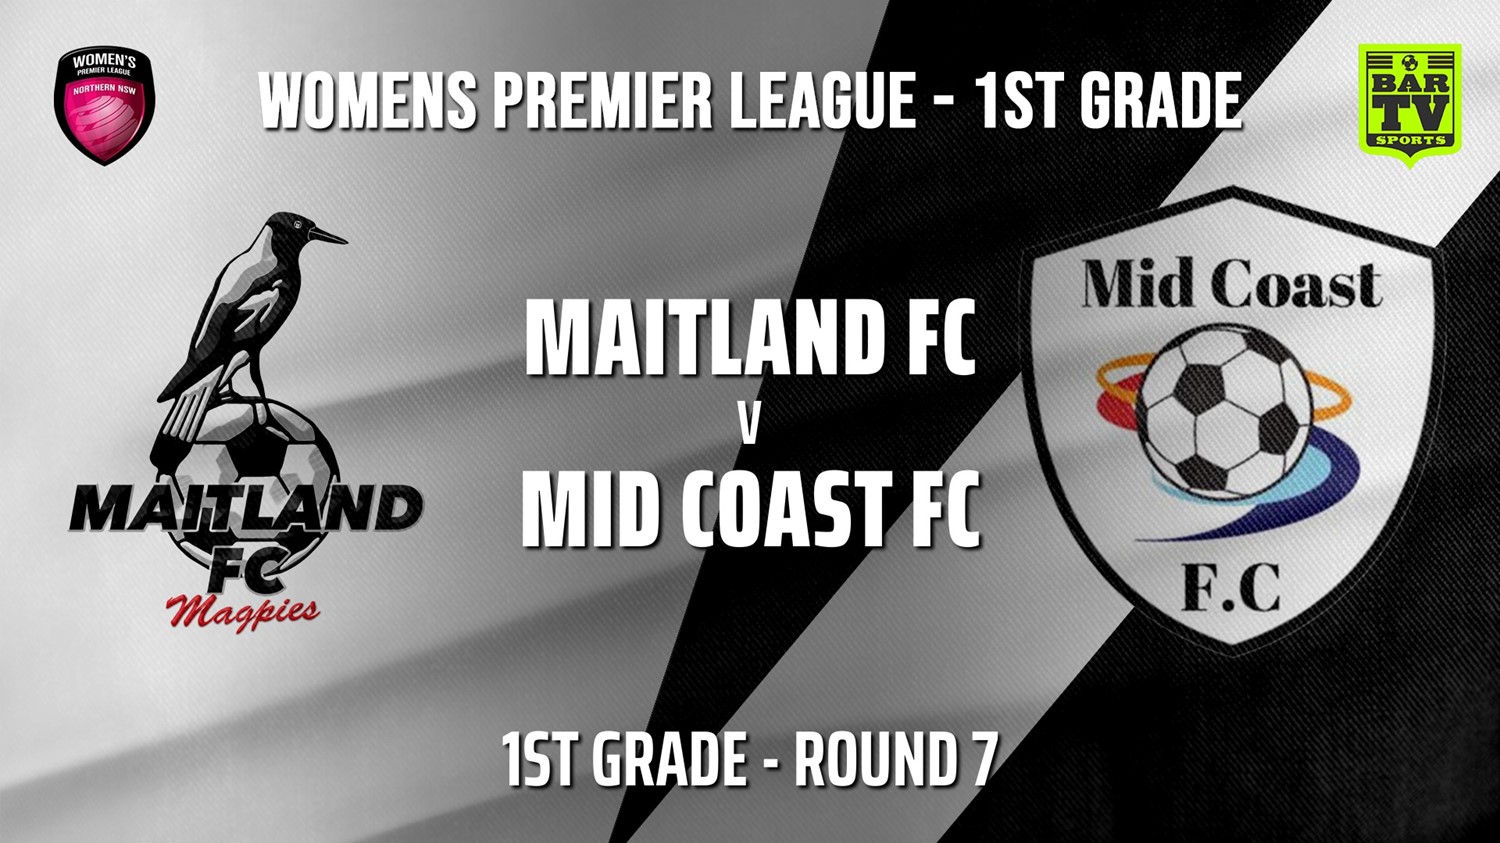 210516-Herald Women’s Premier League Round 7 - 1st Grade - Maitland FC (women) v Mid Coast FC (women) Slate Image